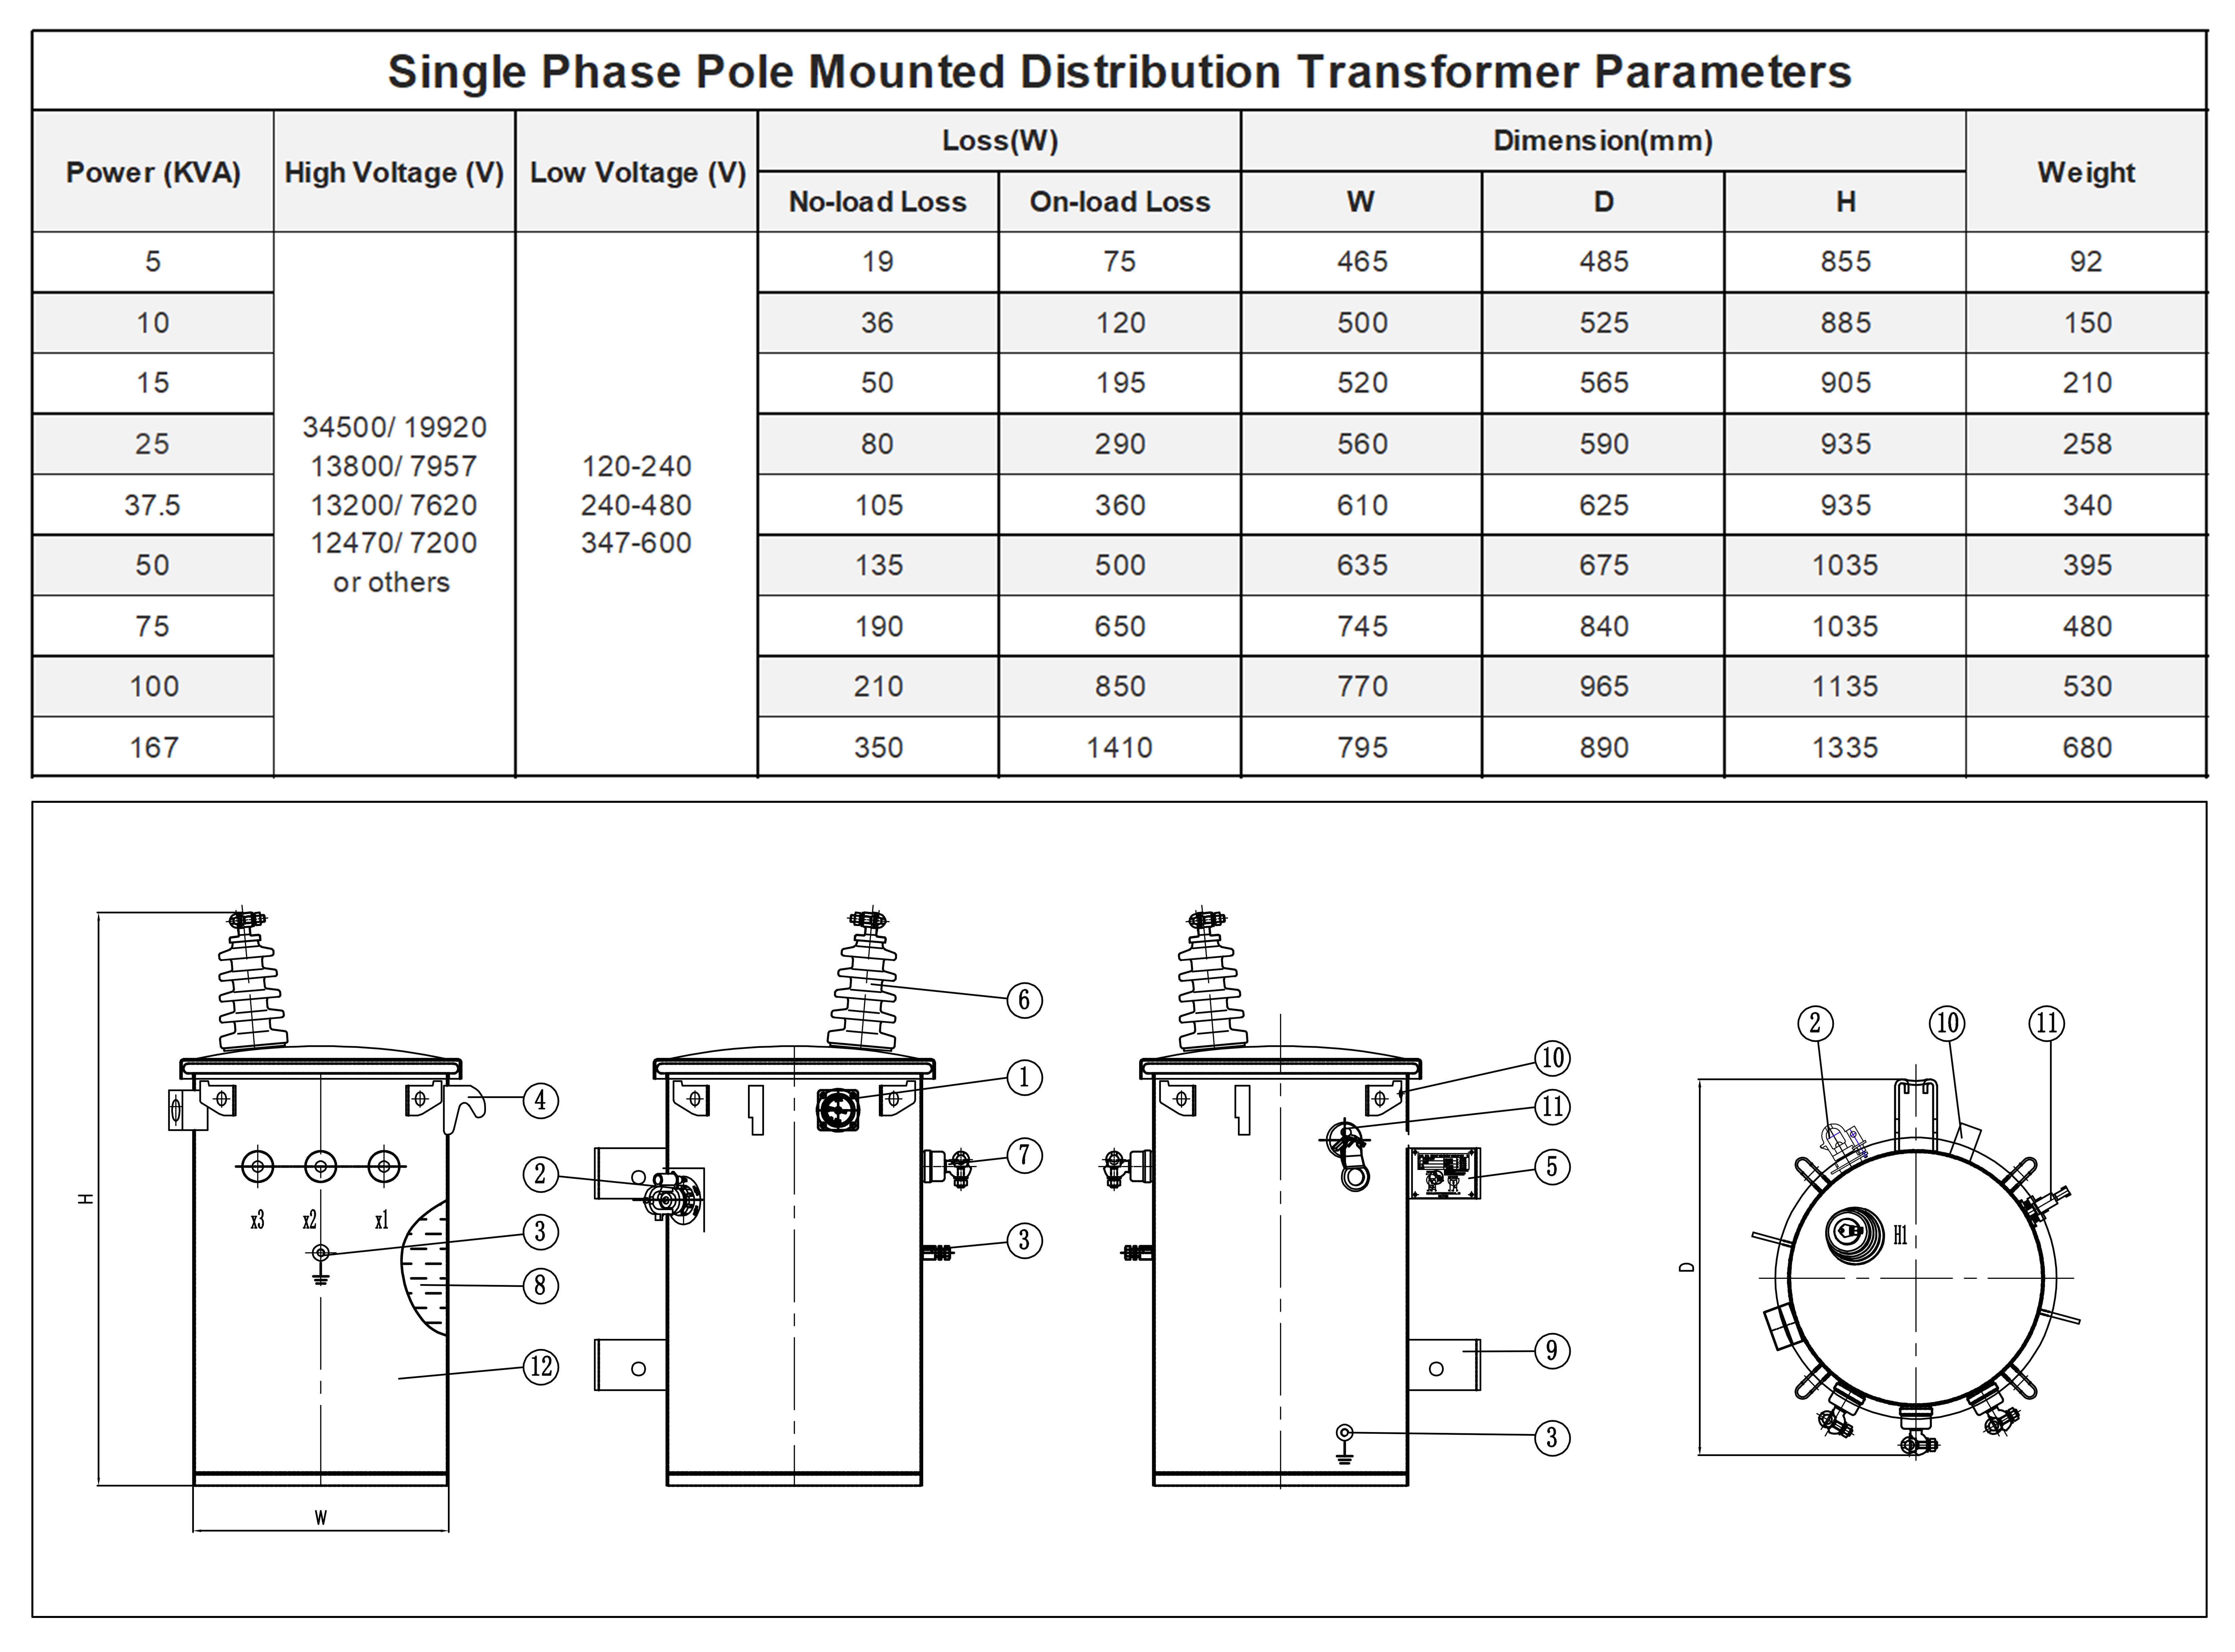 10kVA Single Phase Pole Mounted Distribution Transformer